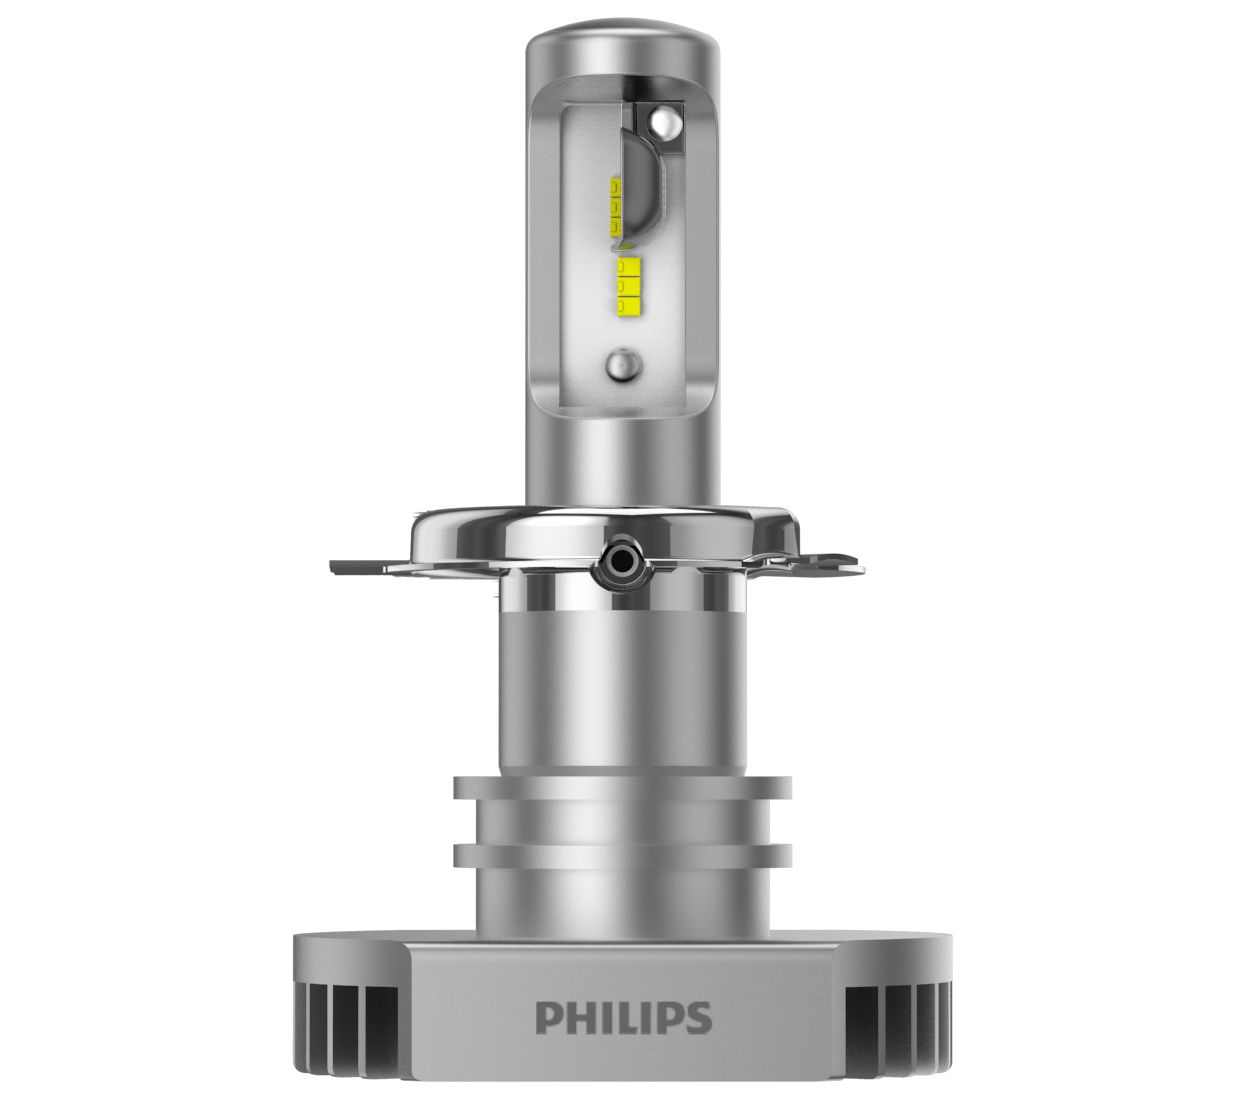 PHILIPS Ultinon - Juego de 2 bombillas LED H4 de 6200 K + 160 % 11342ULWX2